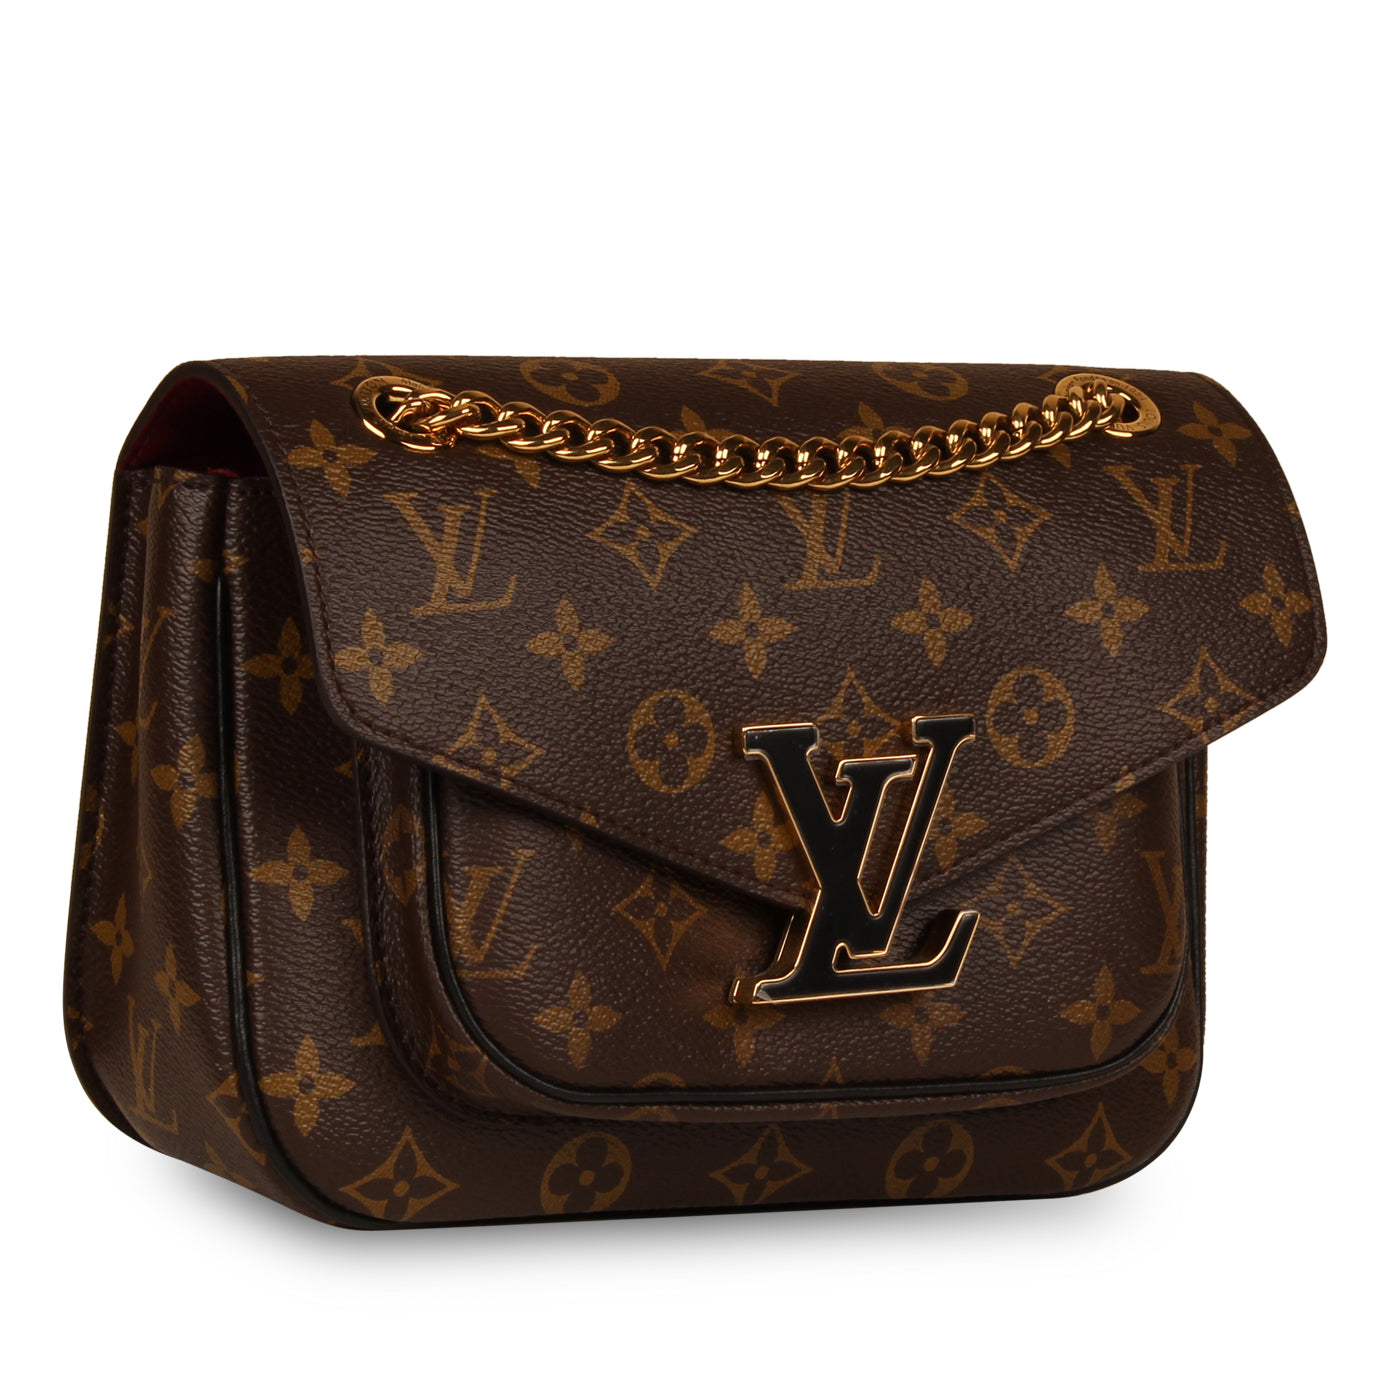 BNIB Louis Vuitton Passy Monogram Chain Bag Size: 24 x 17 x 12 cm (Depth x  Height x Width) price 25.000.000